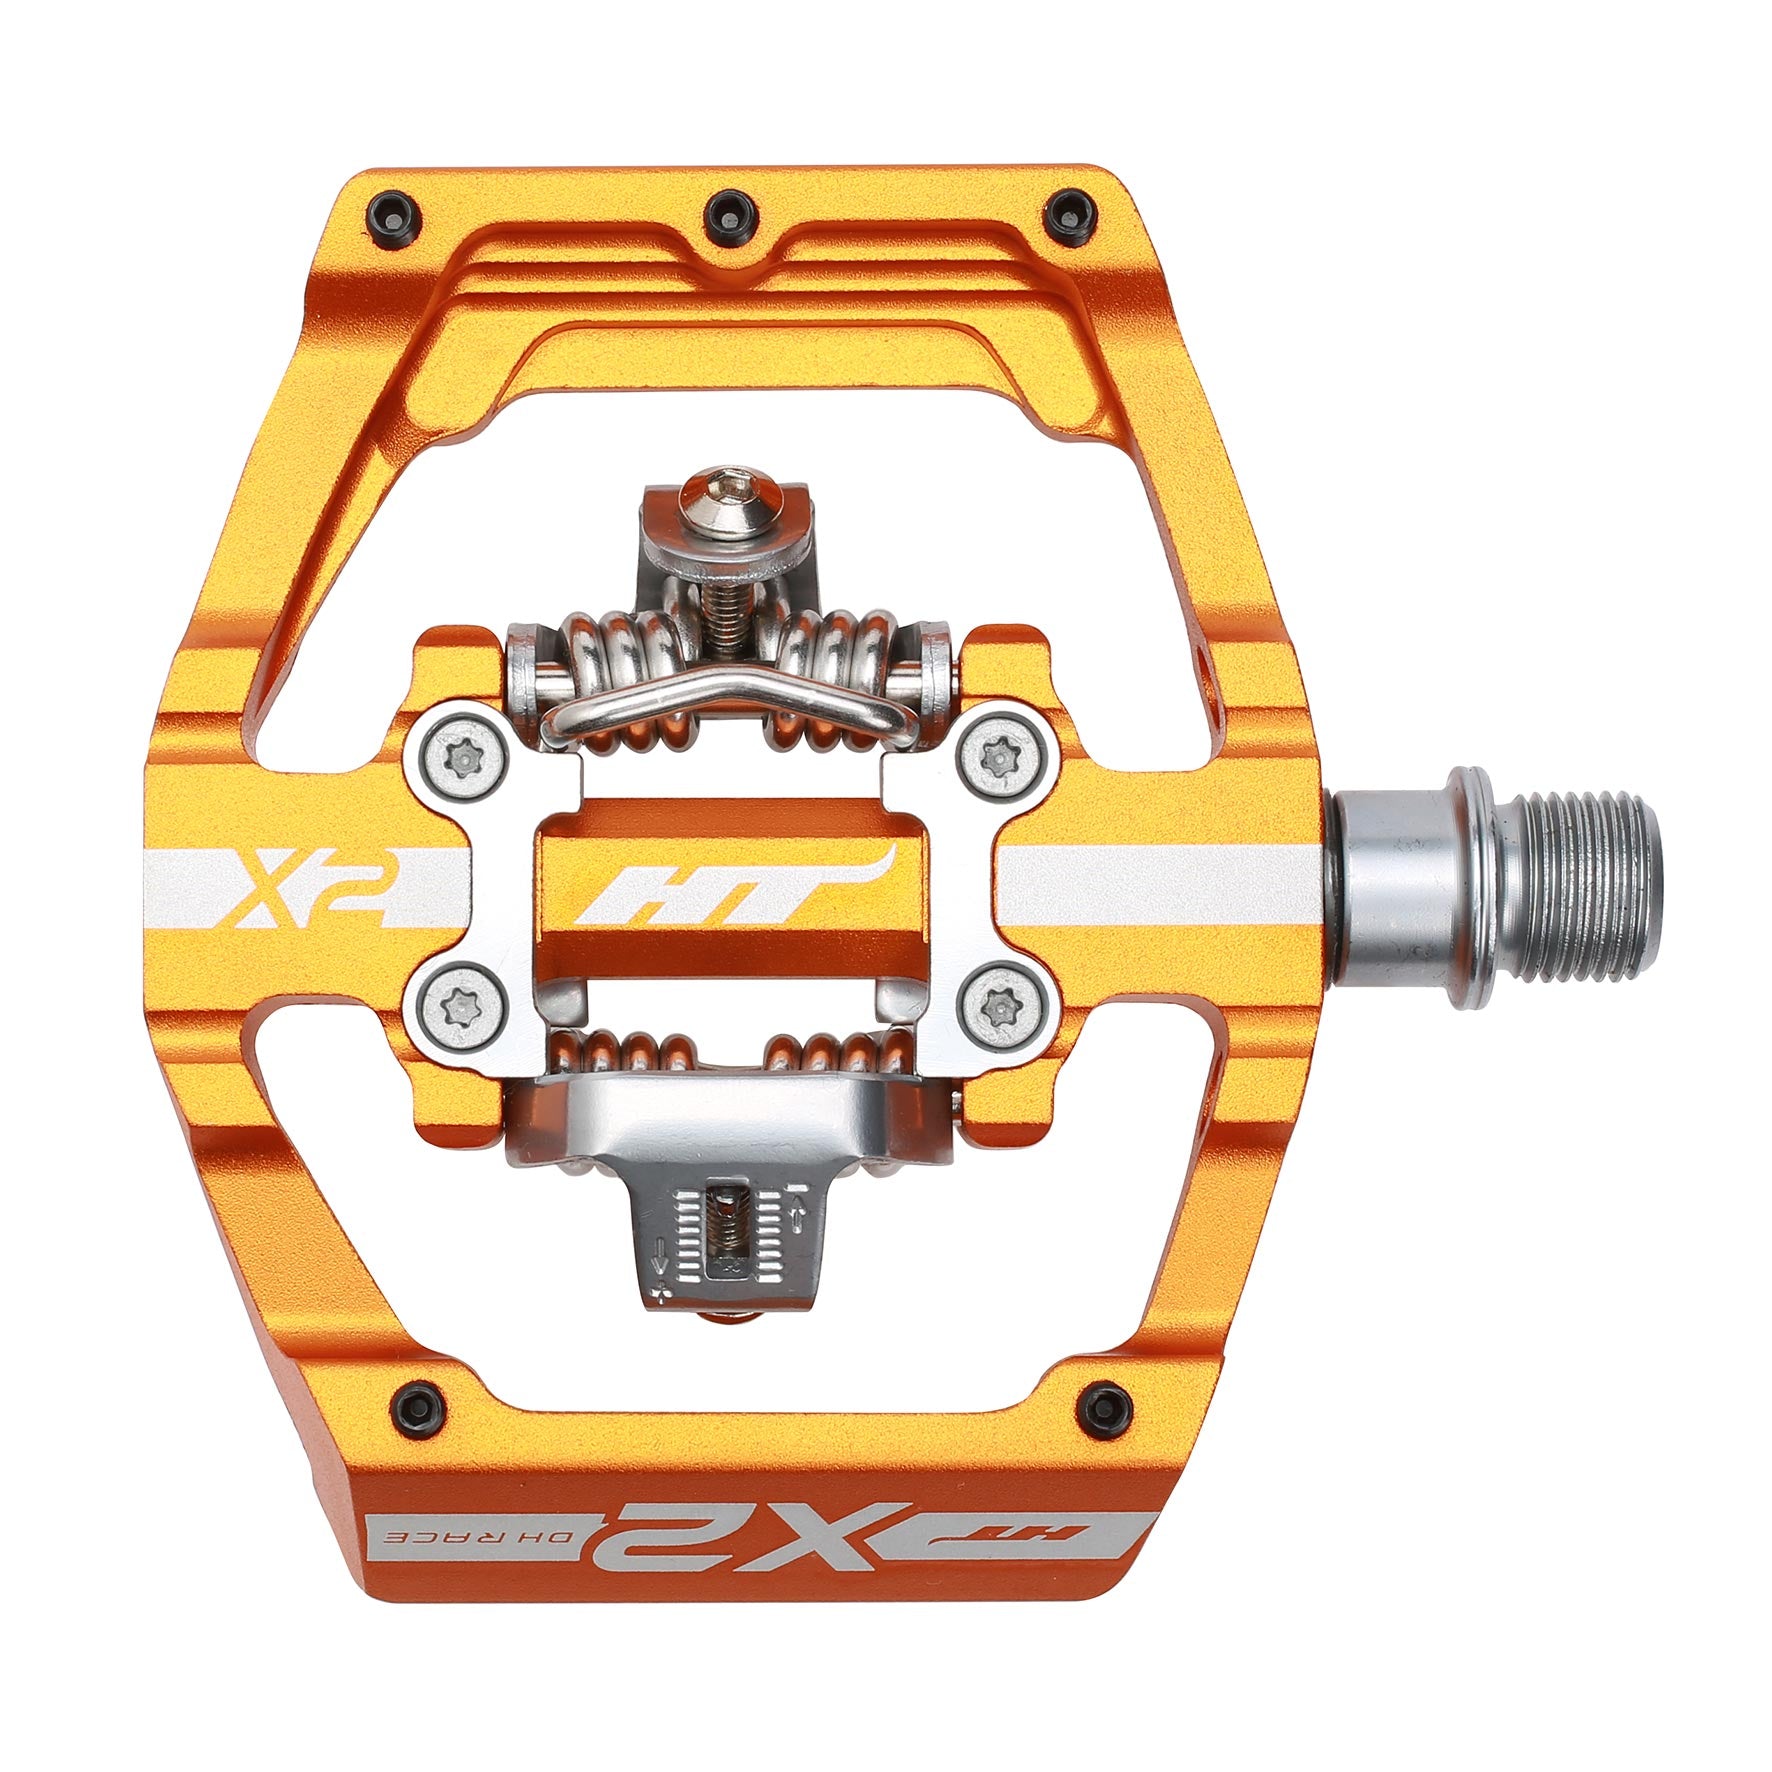 Ht X2 Pedals Alloy / CNC CRMO - Orange